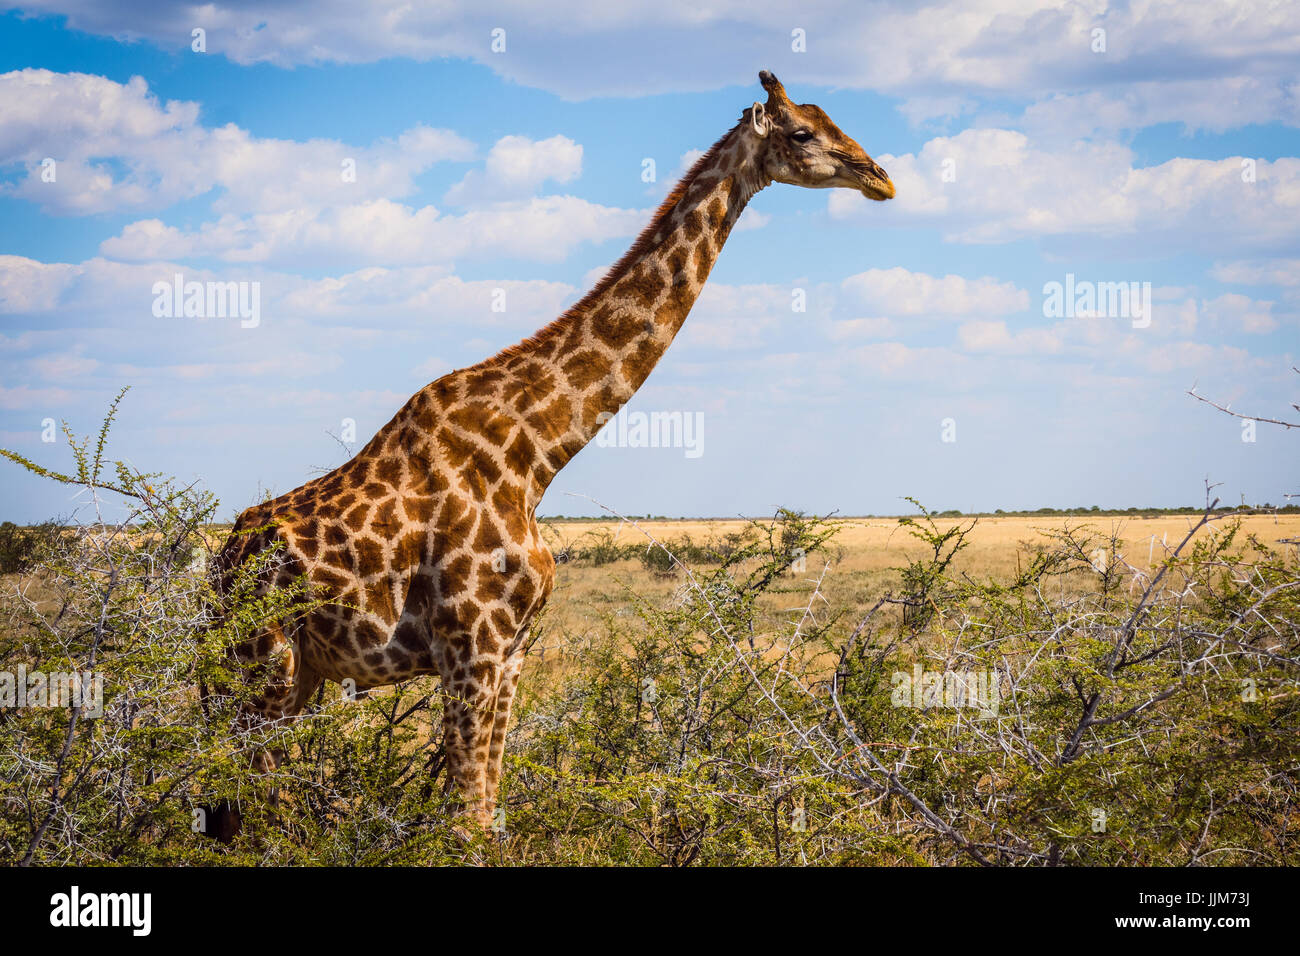 Giraffe in Namibia, Africa Stock Photo